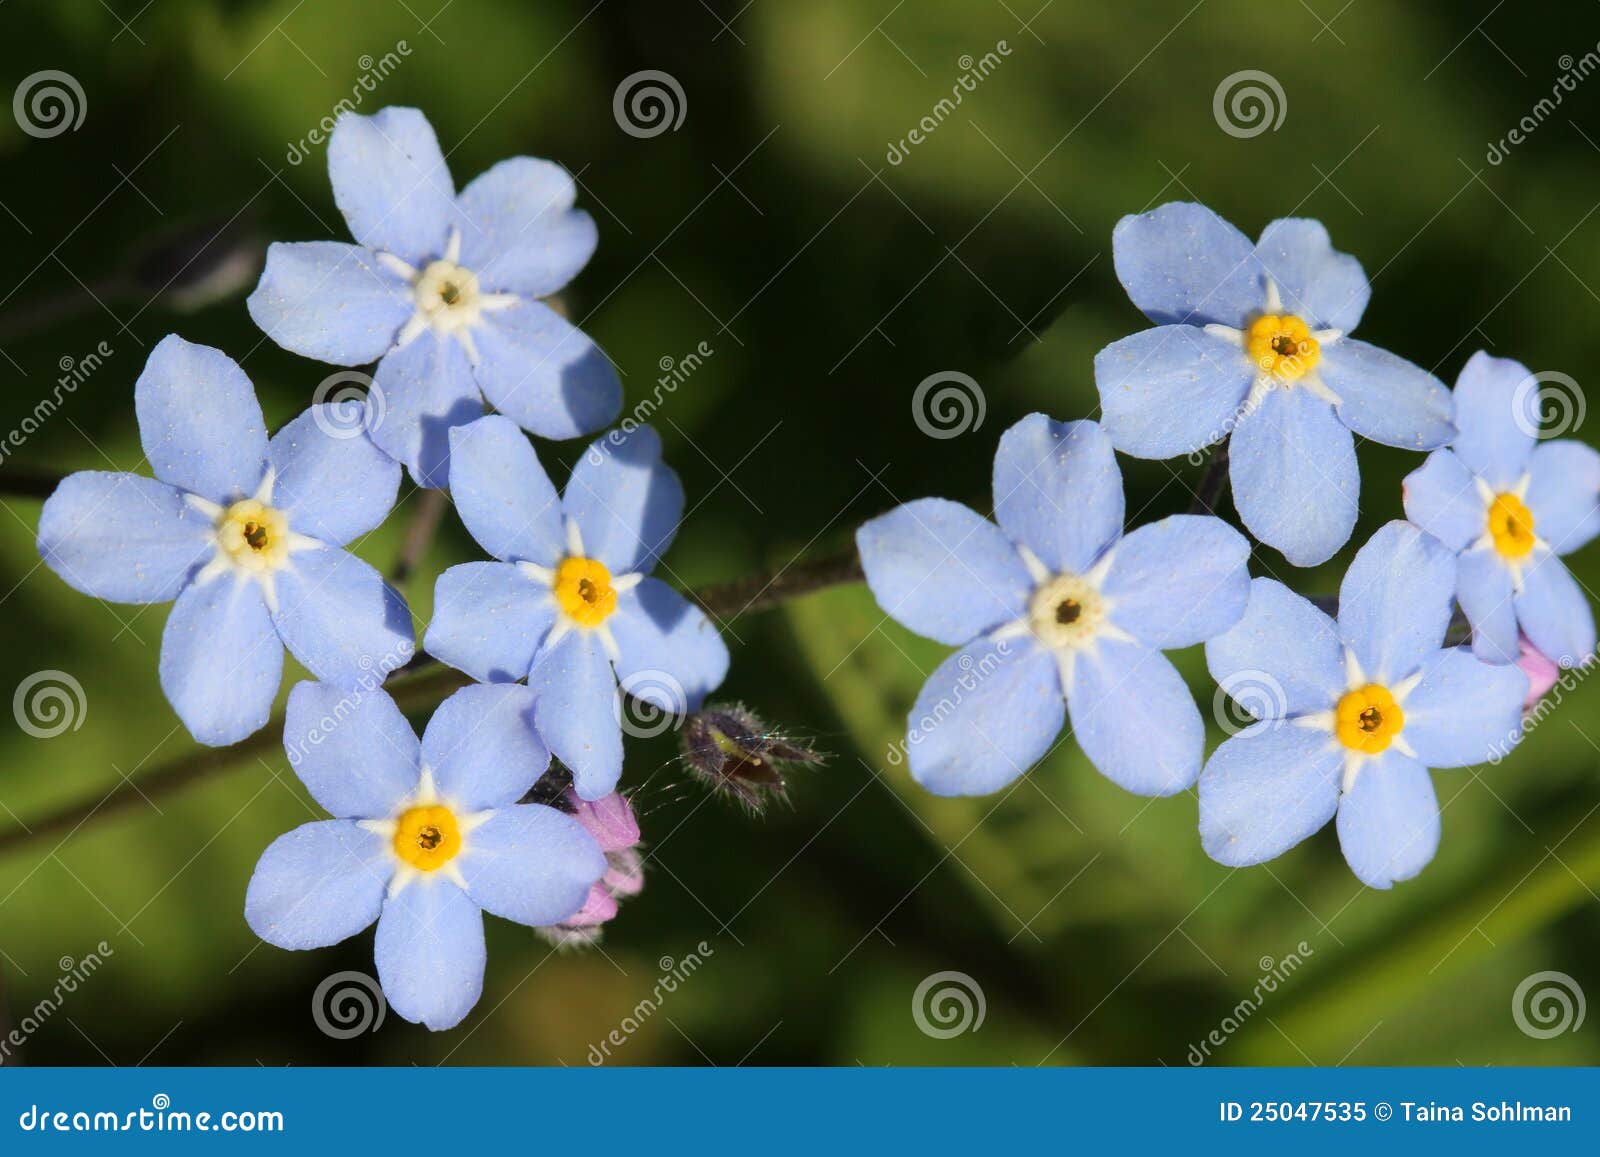 blue forget-me-not flowers (myosotis)